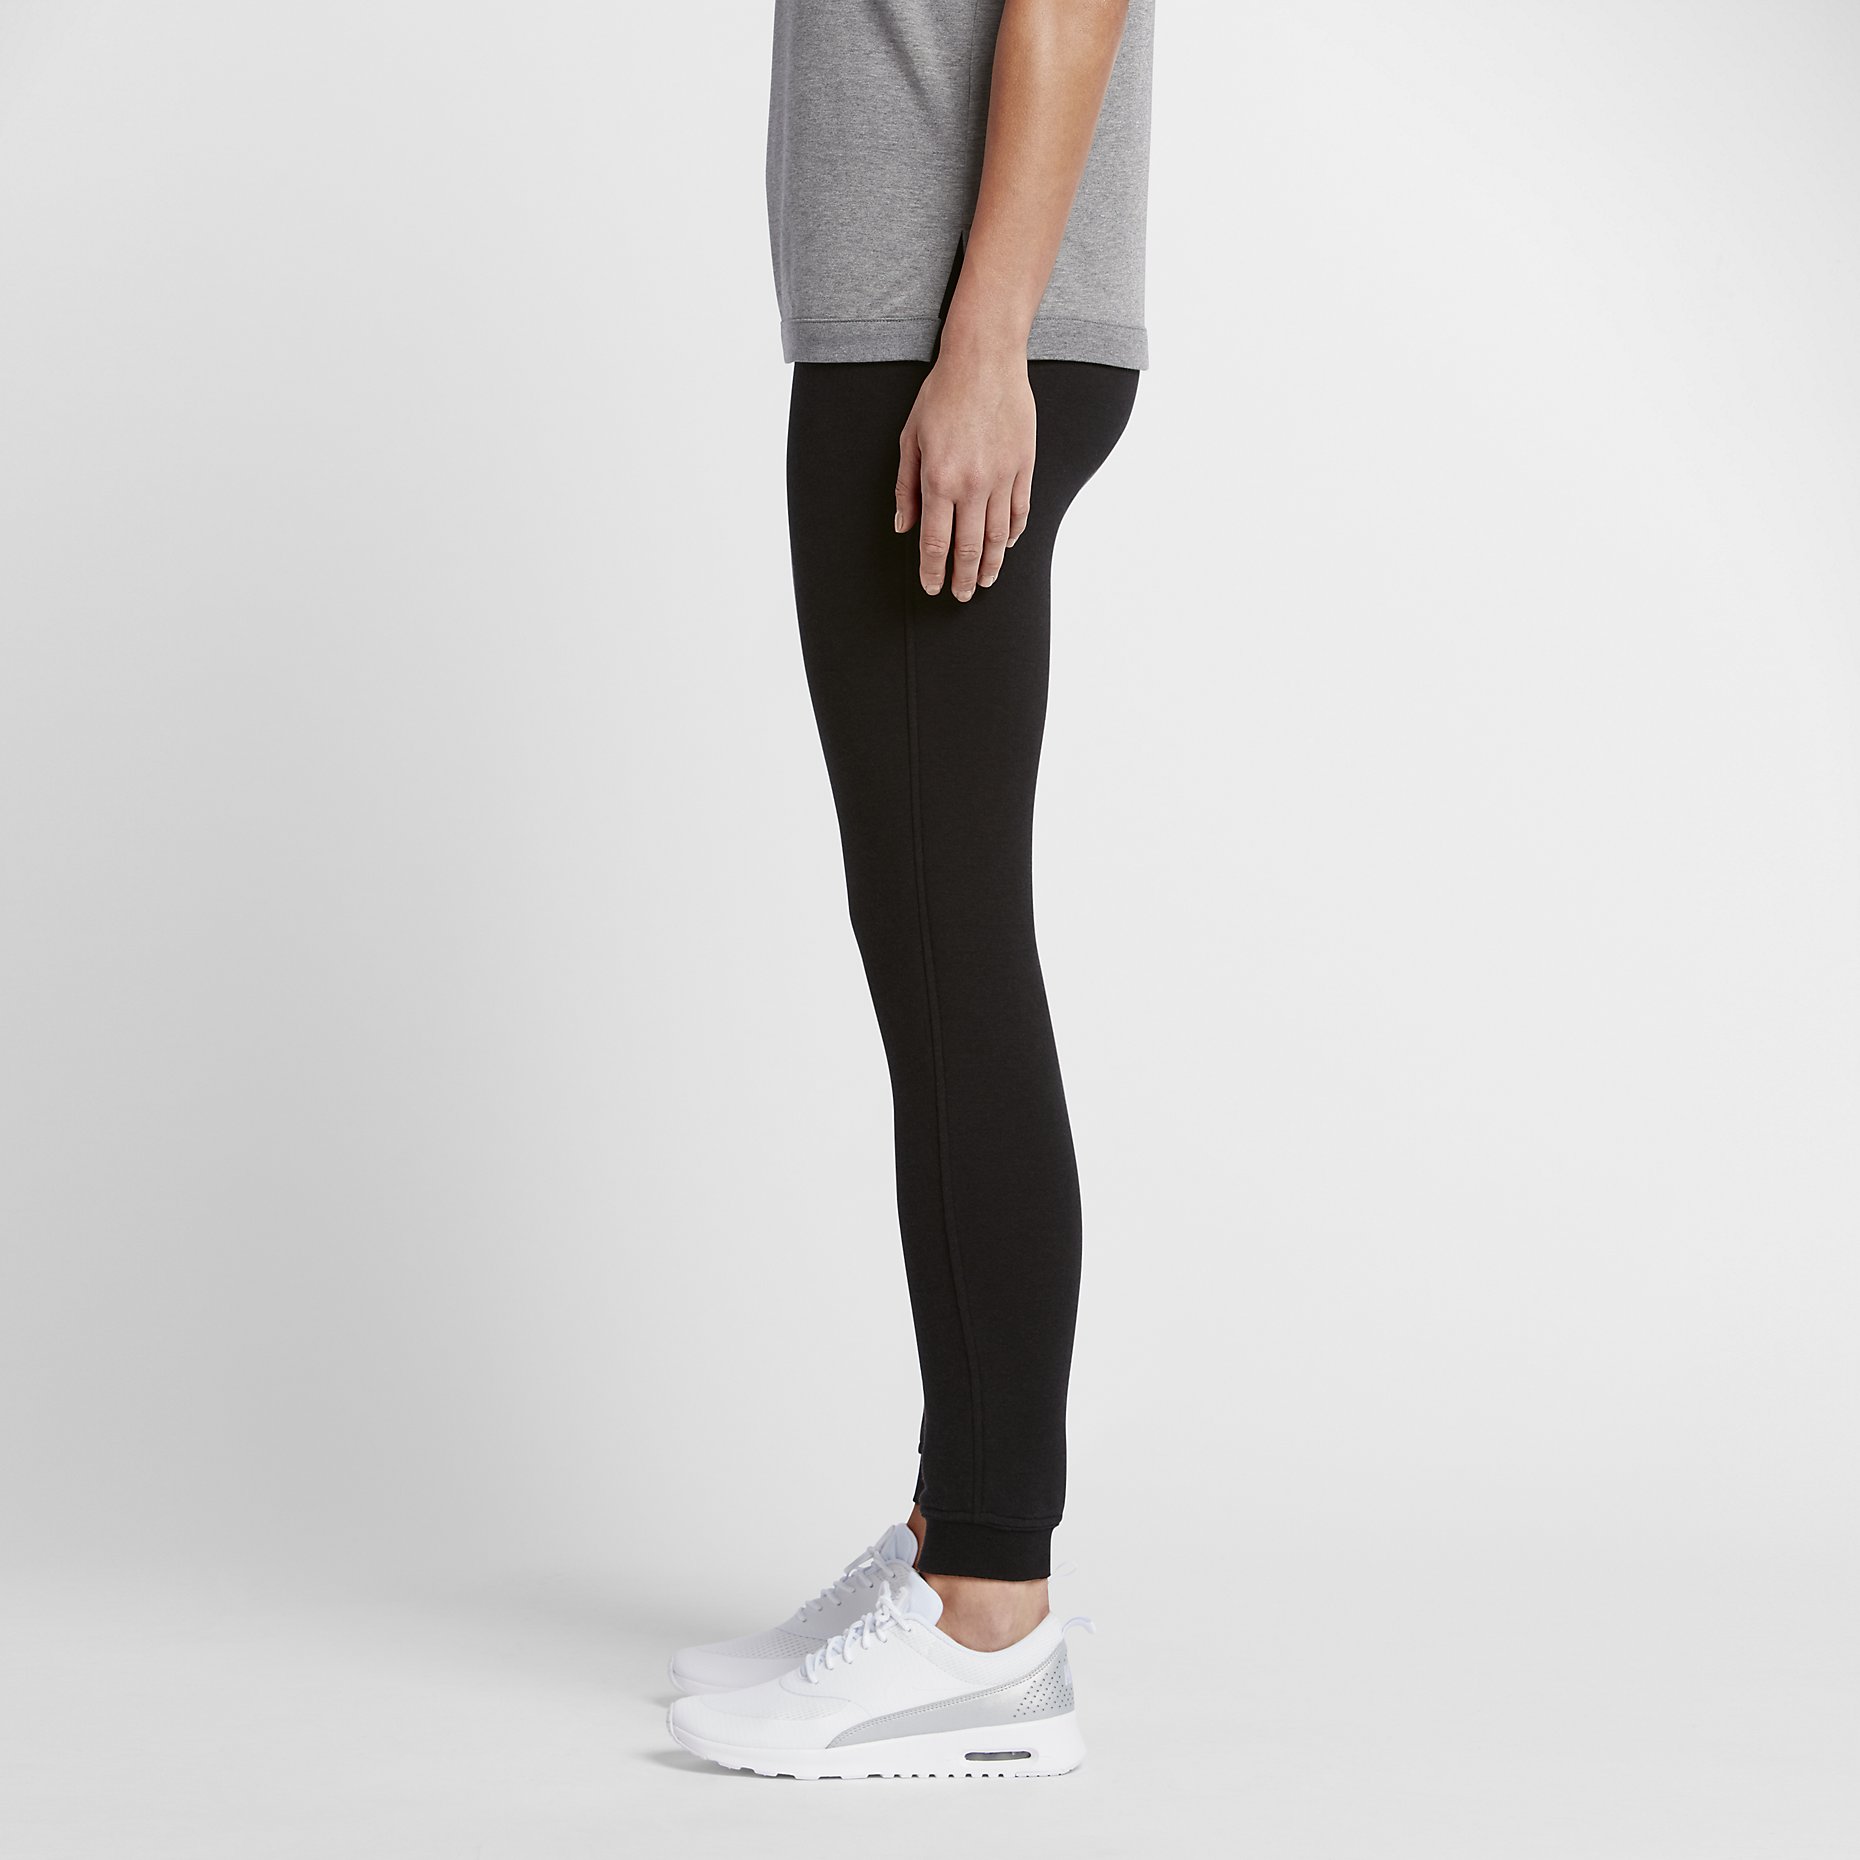 Nike, Pro Tight New női nadrág, Nők, root, Fekete